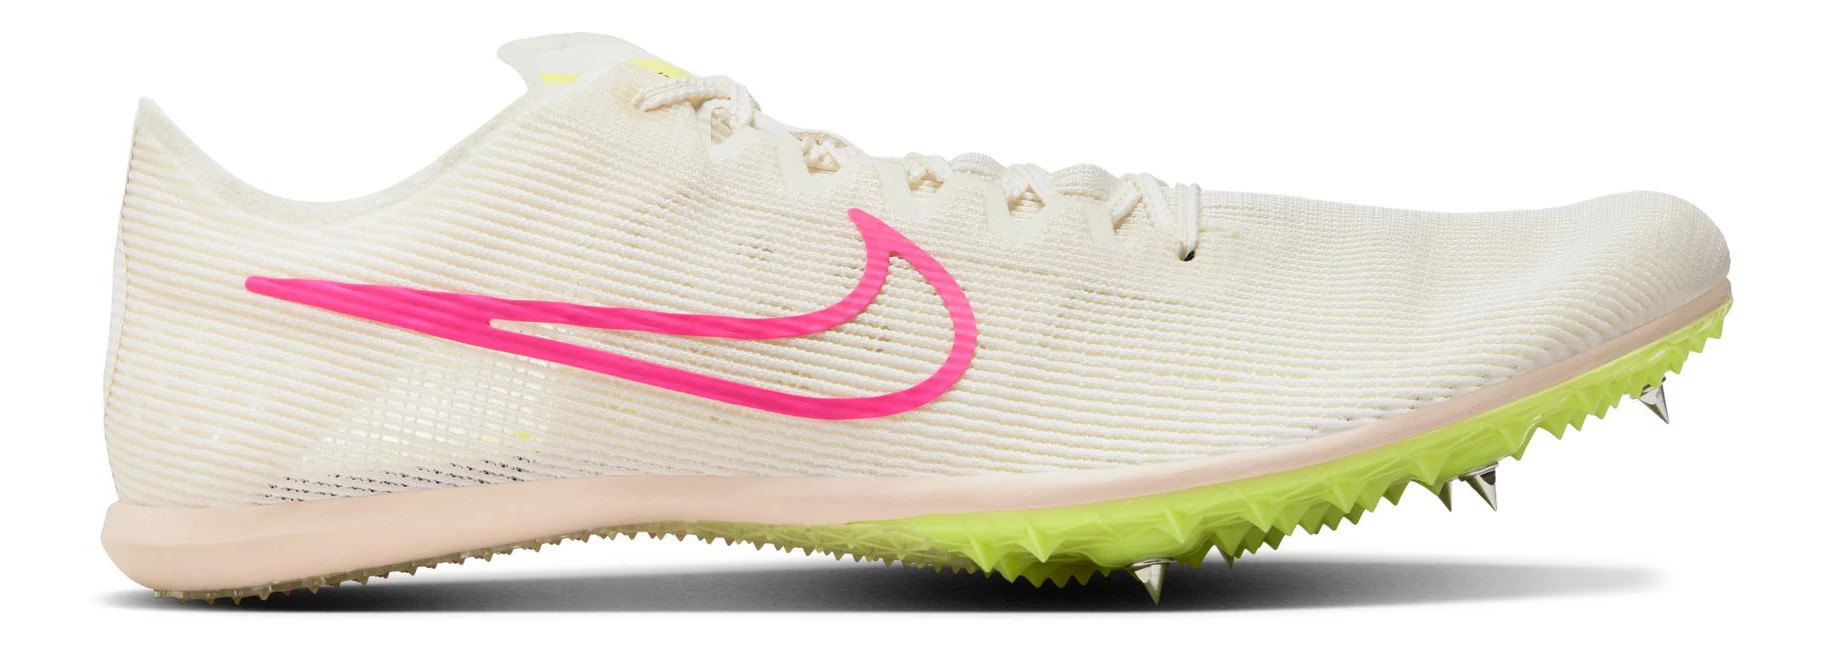 Nike Zoom Mamba 6 Track and Field Shoe